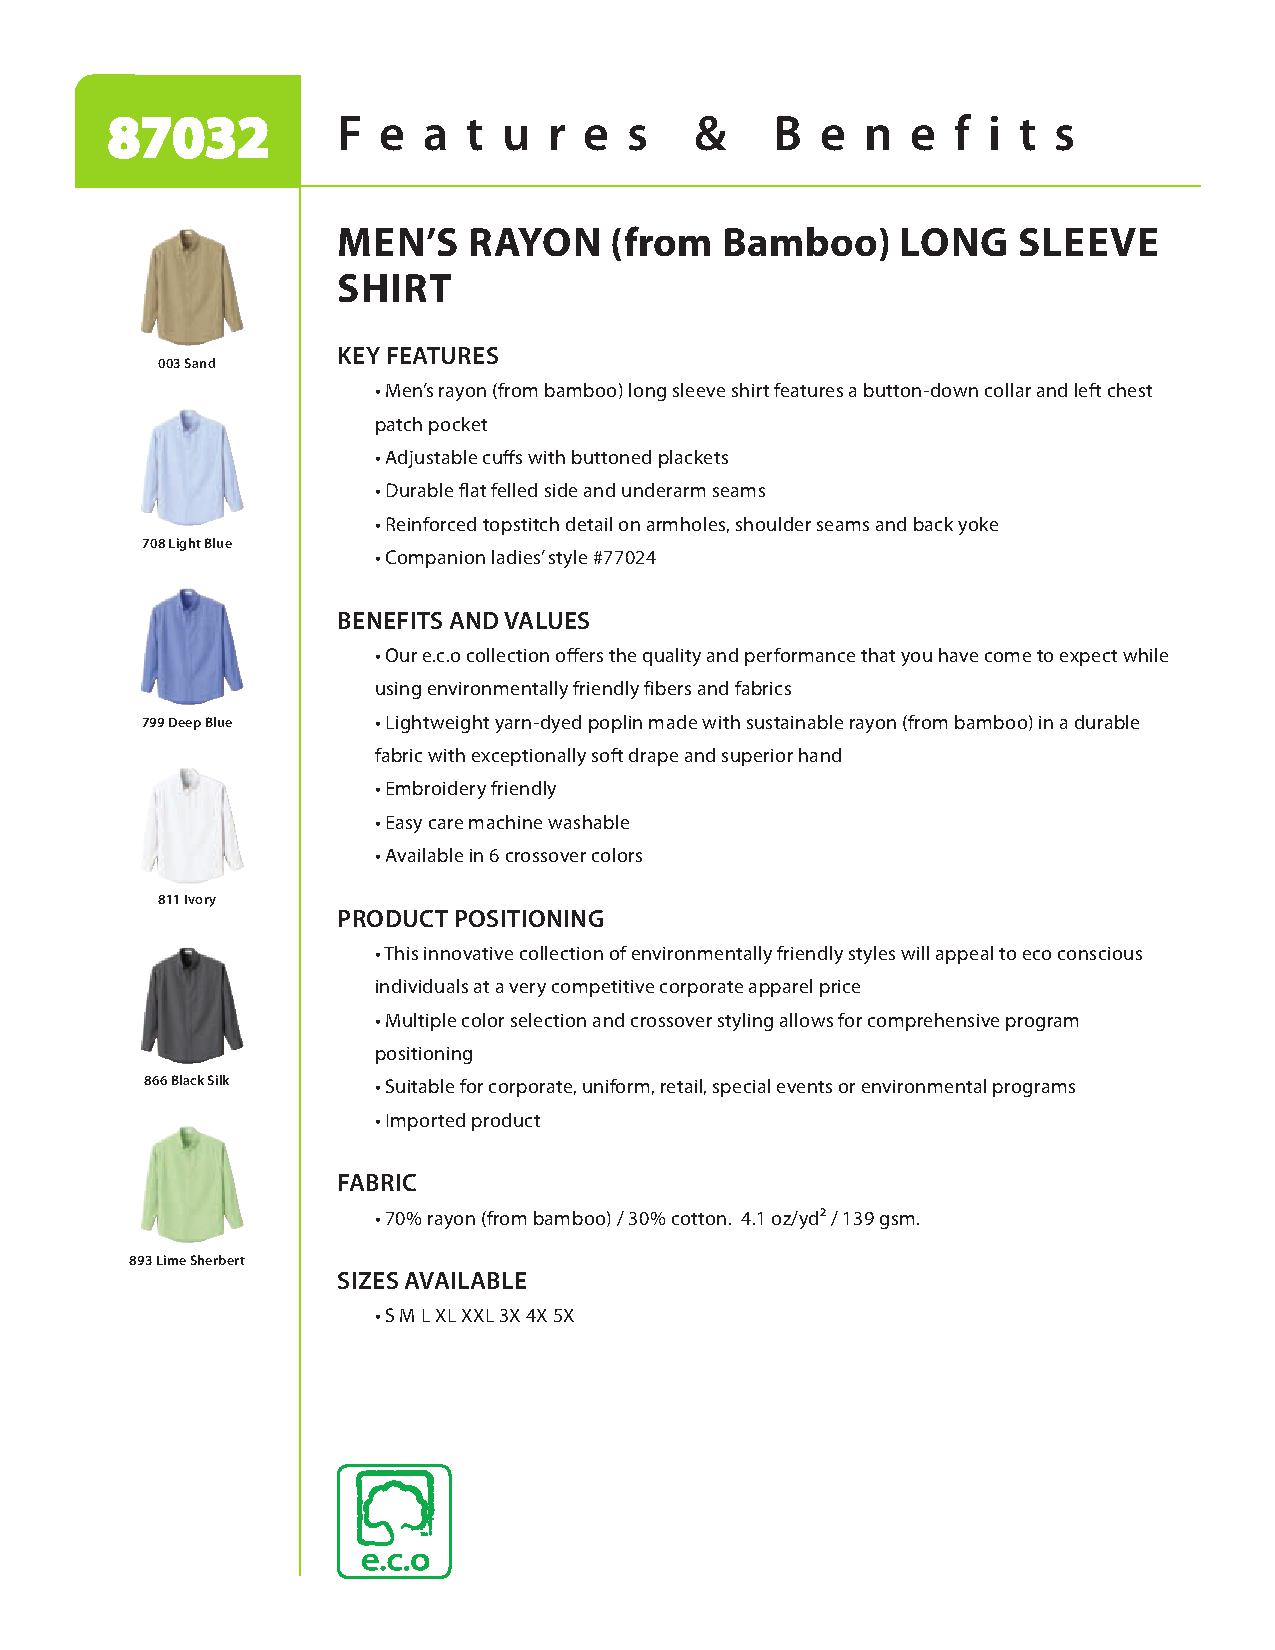 Ash City e.c.o Wovens 87032 - Men's Rayon (from Bamboo) Long Sleeve Shirt